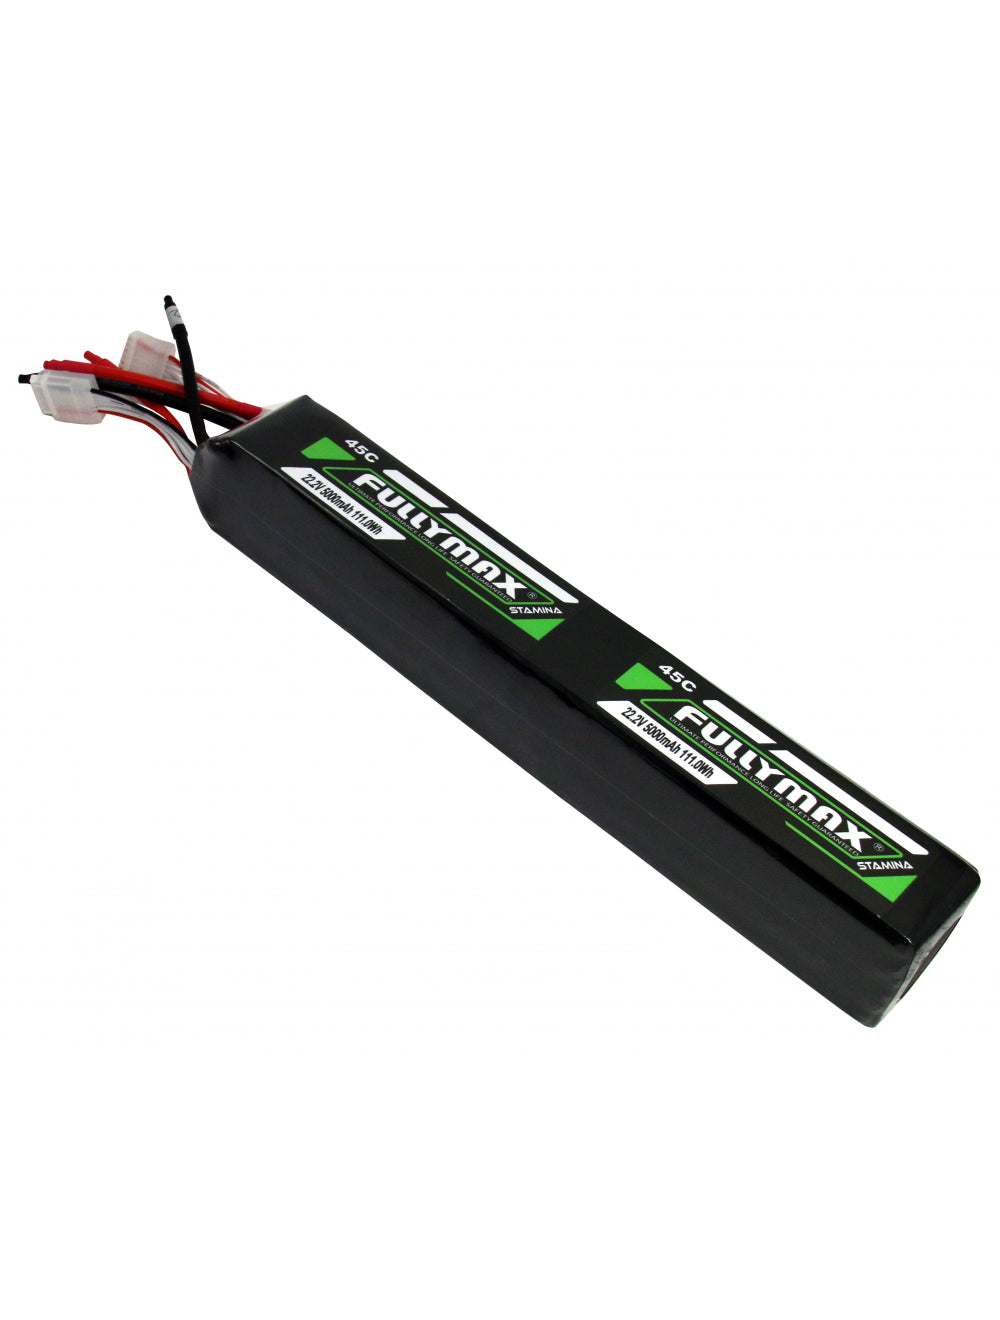 Overlander Fullymax 5000mAh 22.2V (x2) 12S 45C LiPo Battery - No Connector 3449